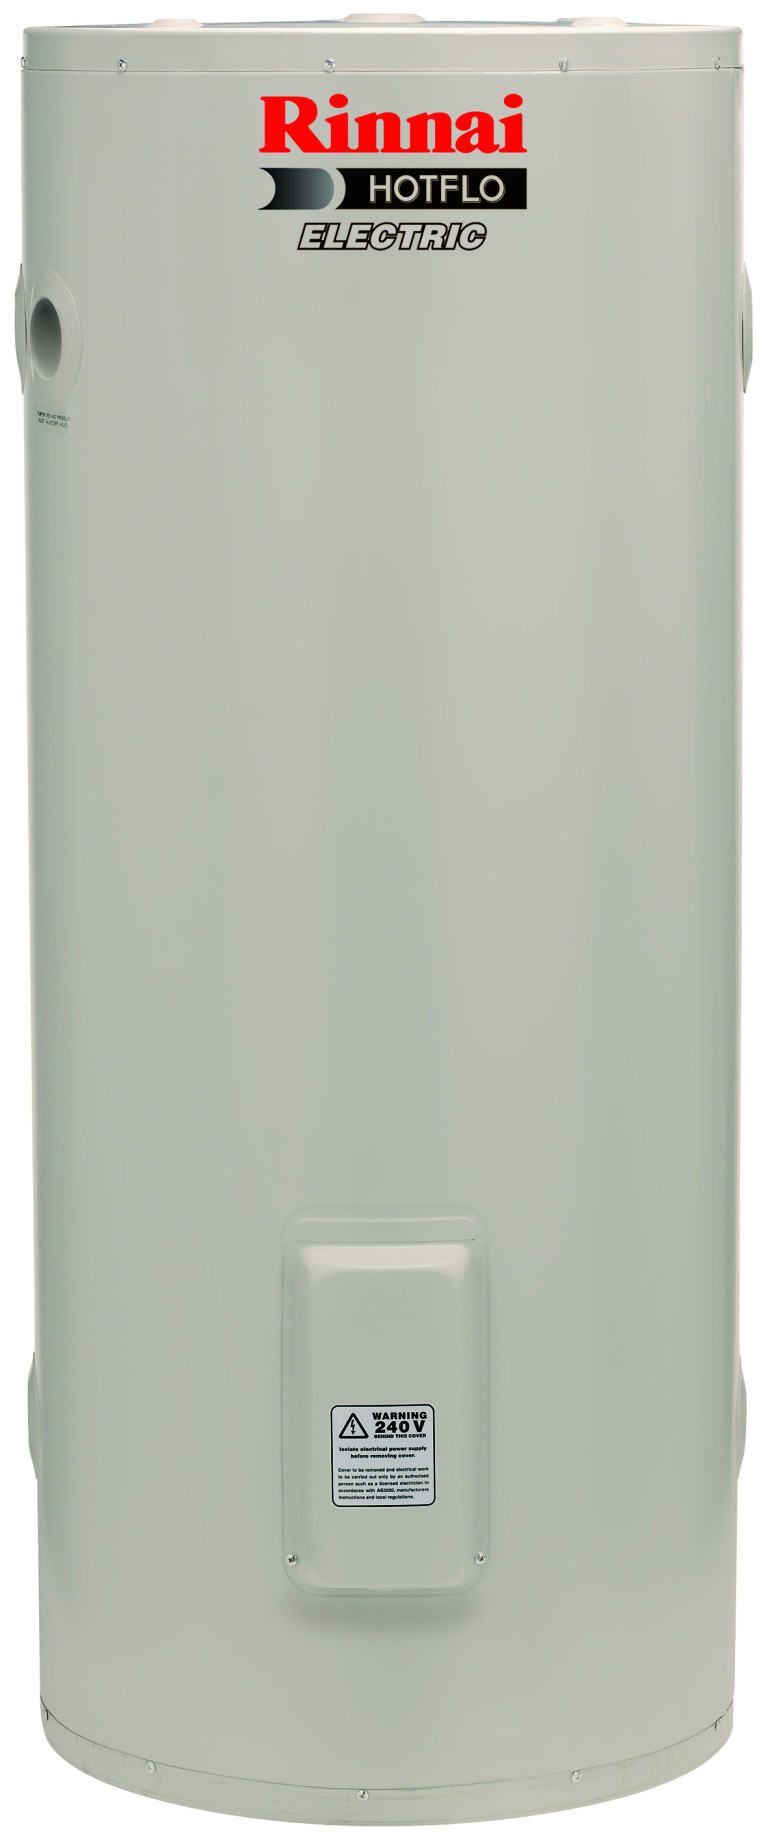 Buy Rinnai Hotflo L Electric Hot Water Heaters